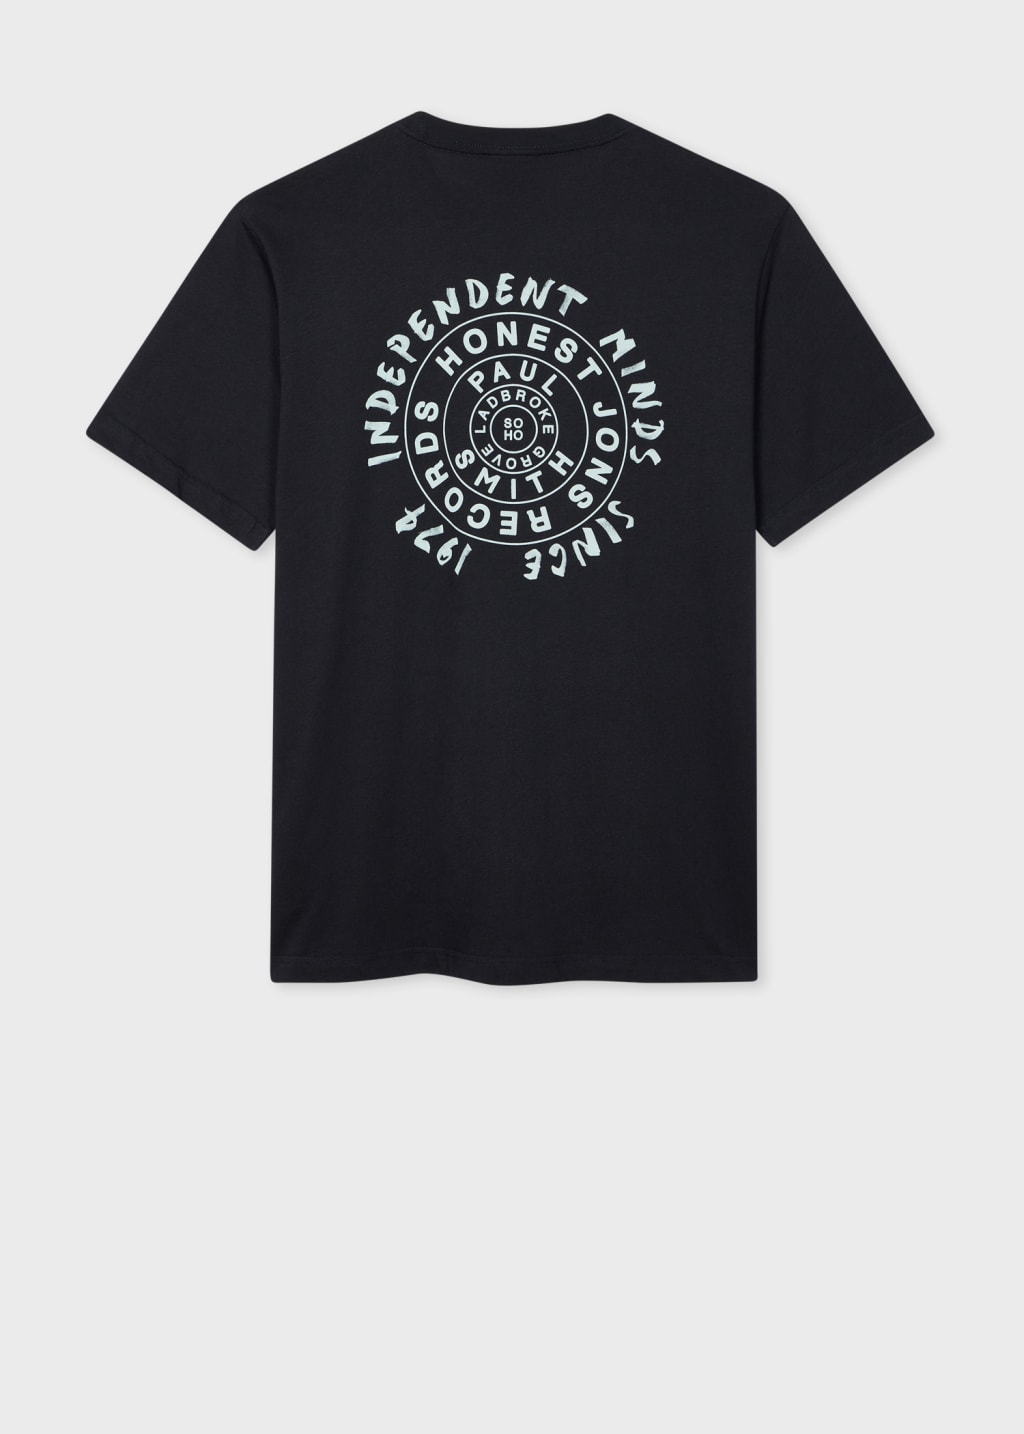 Product view - Navy 'Honest Jon's Records' Print T-Shirt